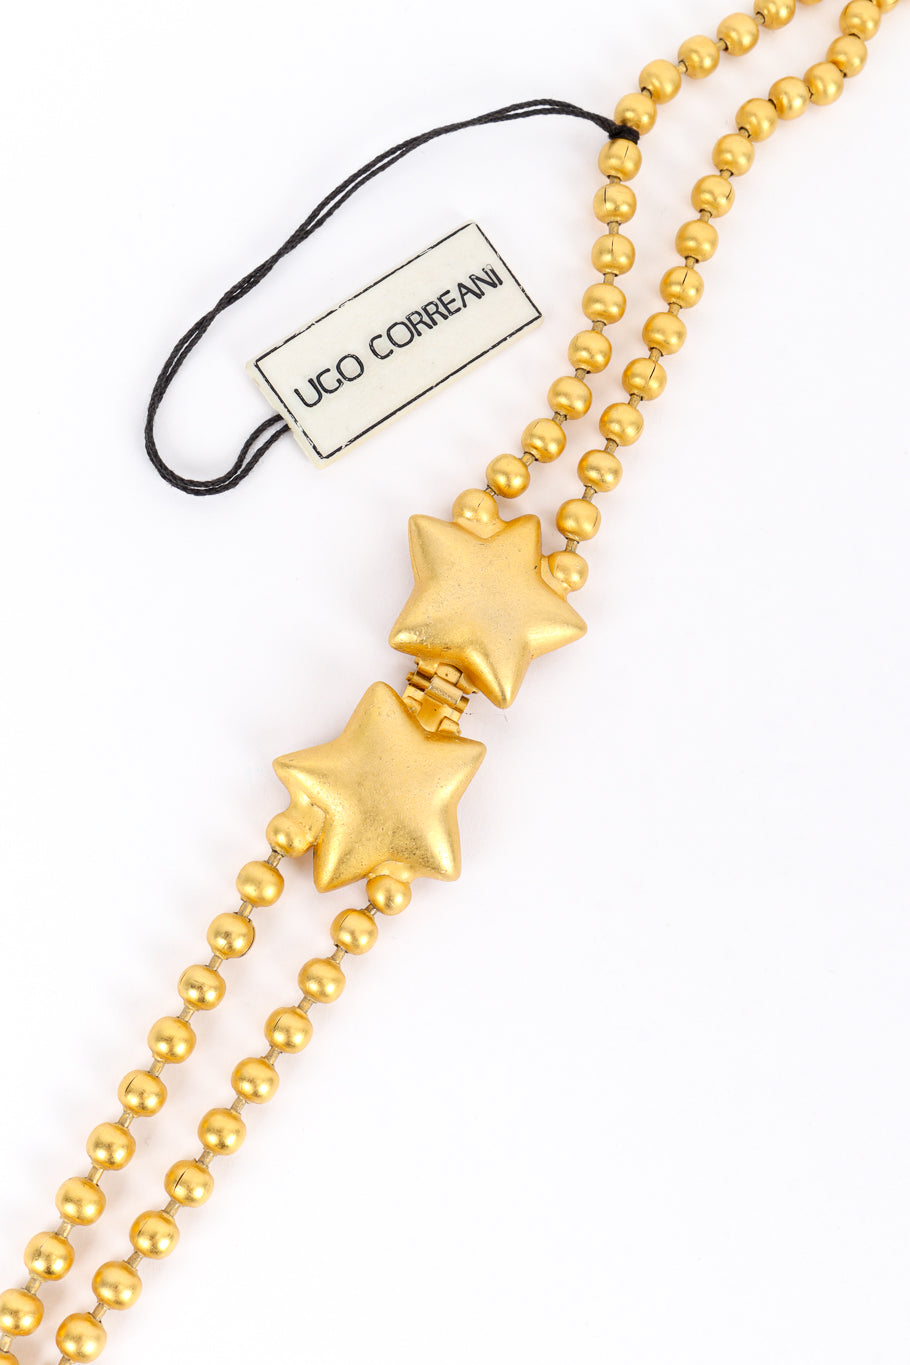 Vintage Ugo Correani Star and Crescent Moon Necklace closure top and signature hang tag @recess la